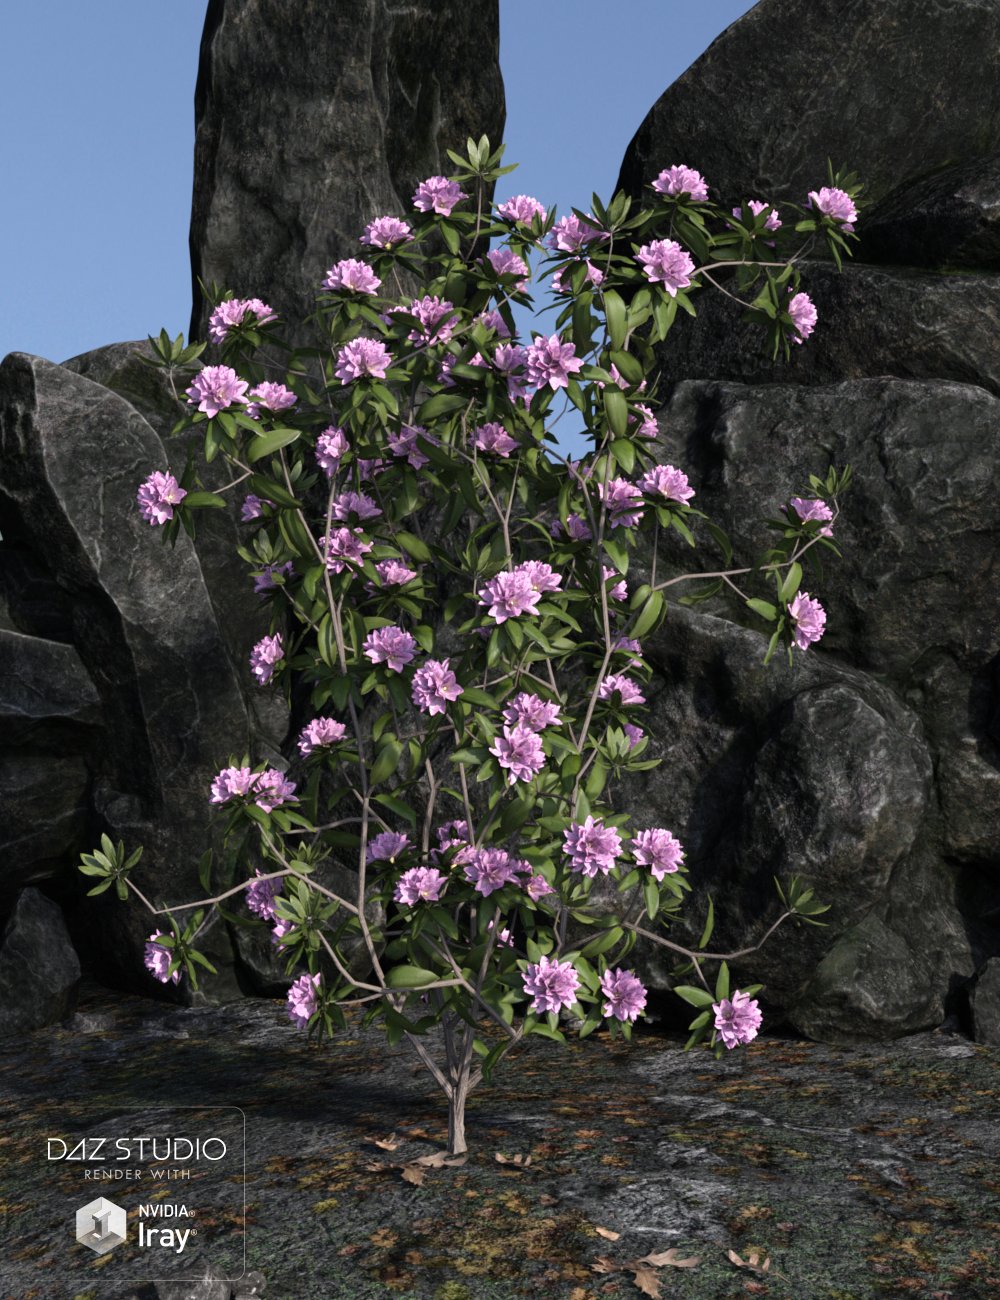 Dumor Scenics - Rhododendrons by: Dumor3D, 3D Models by Daz 3D